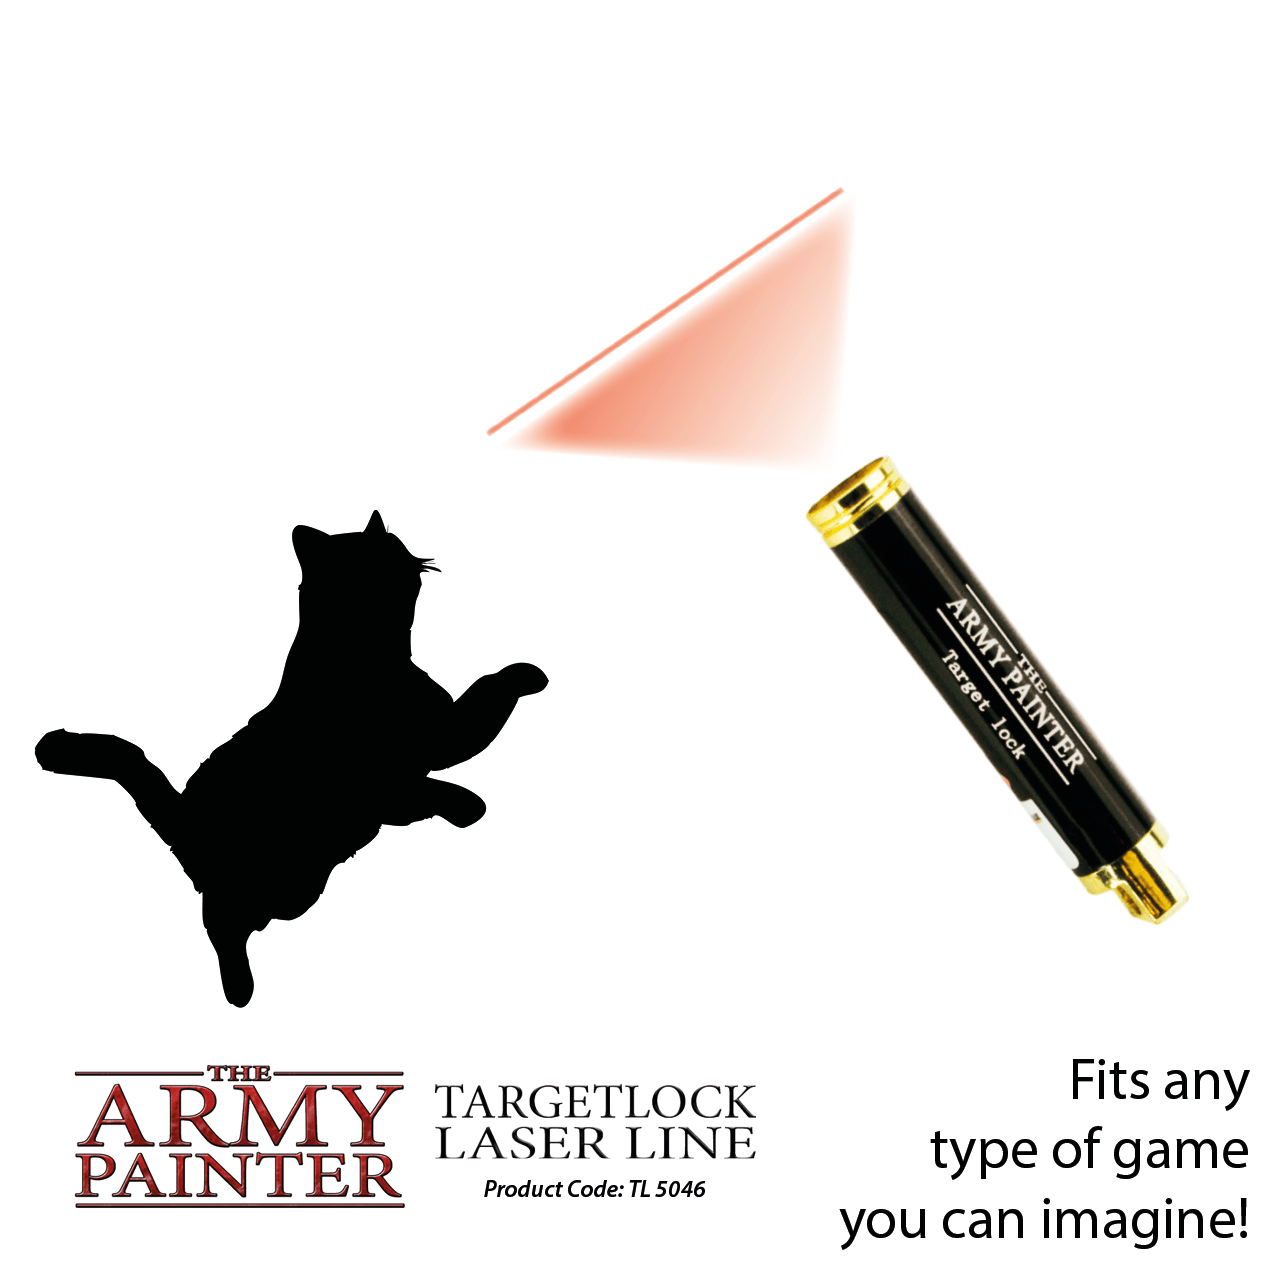 Targetlock Laser Line - Saltire Games